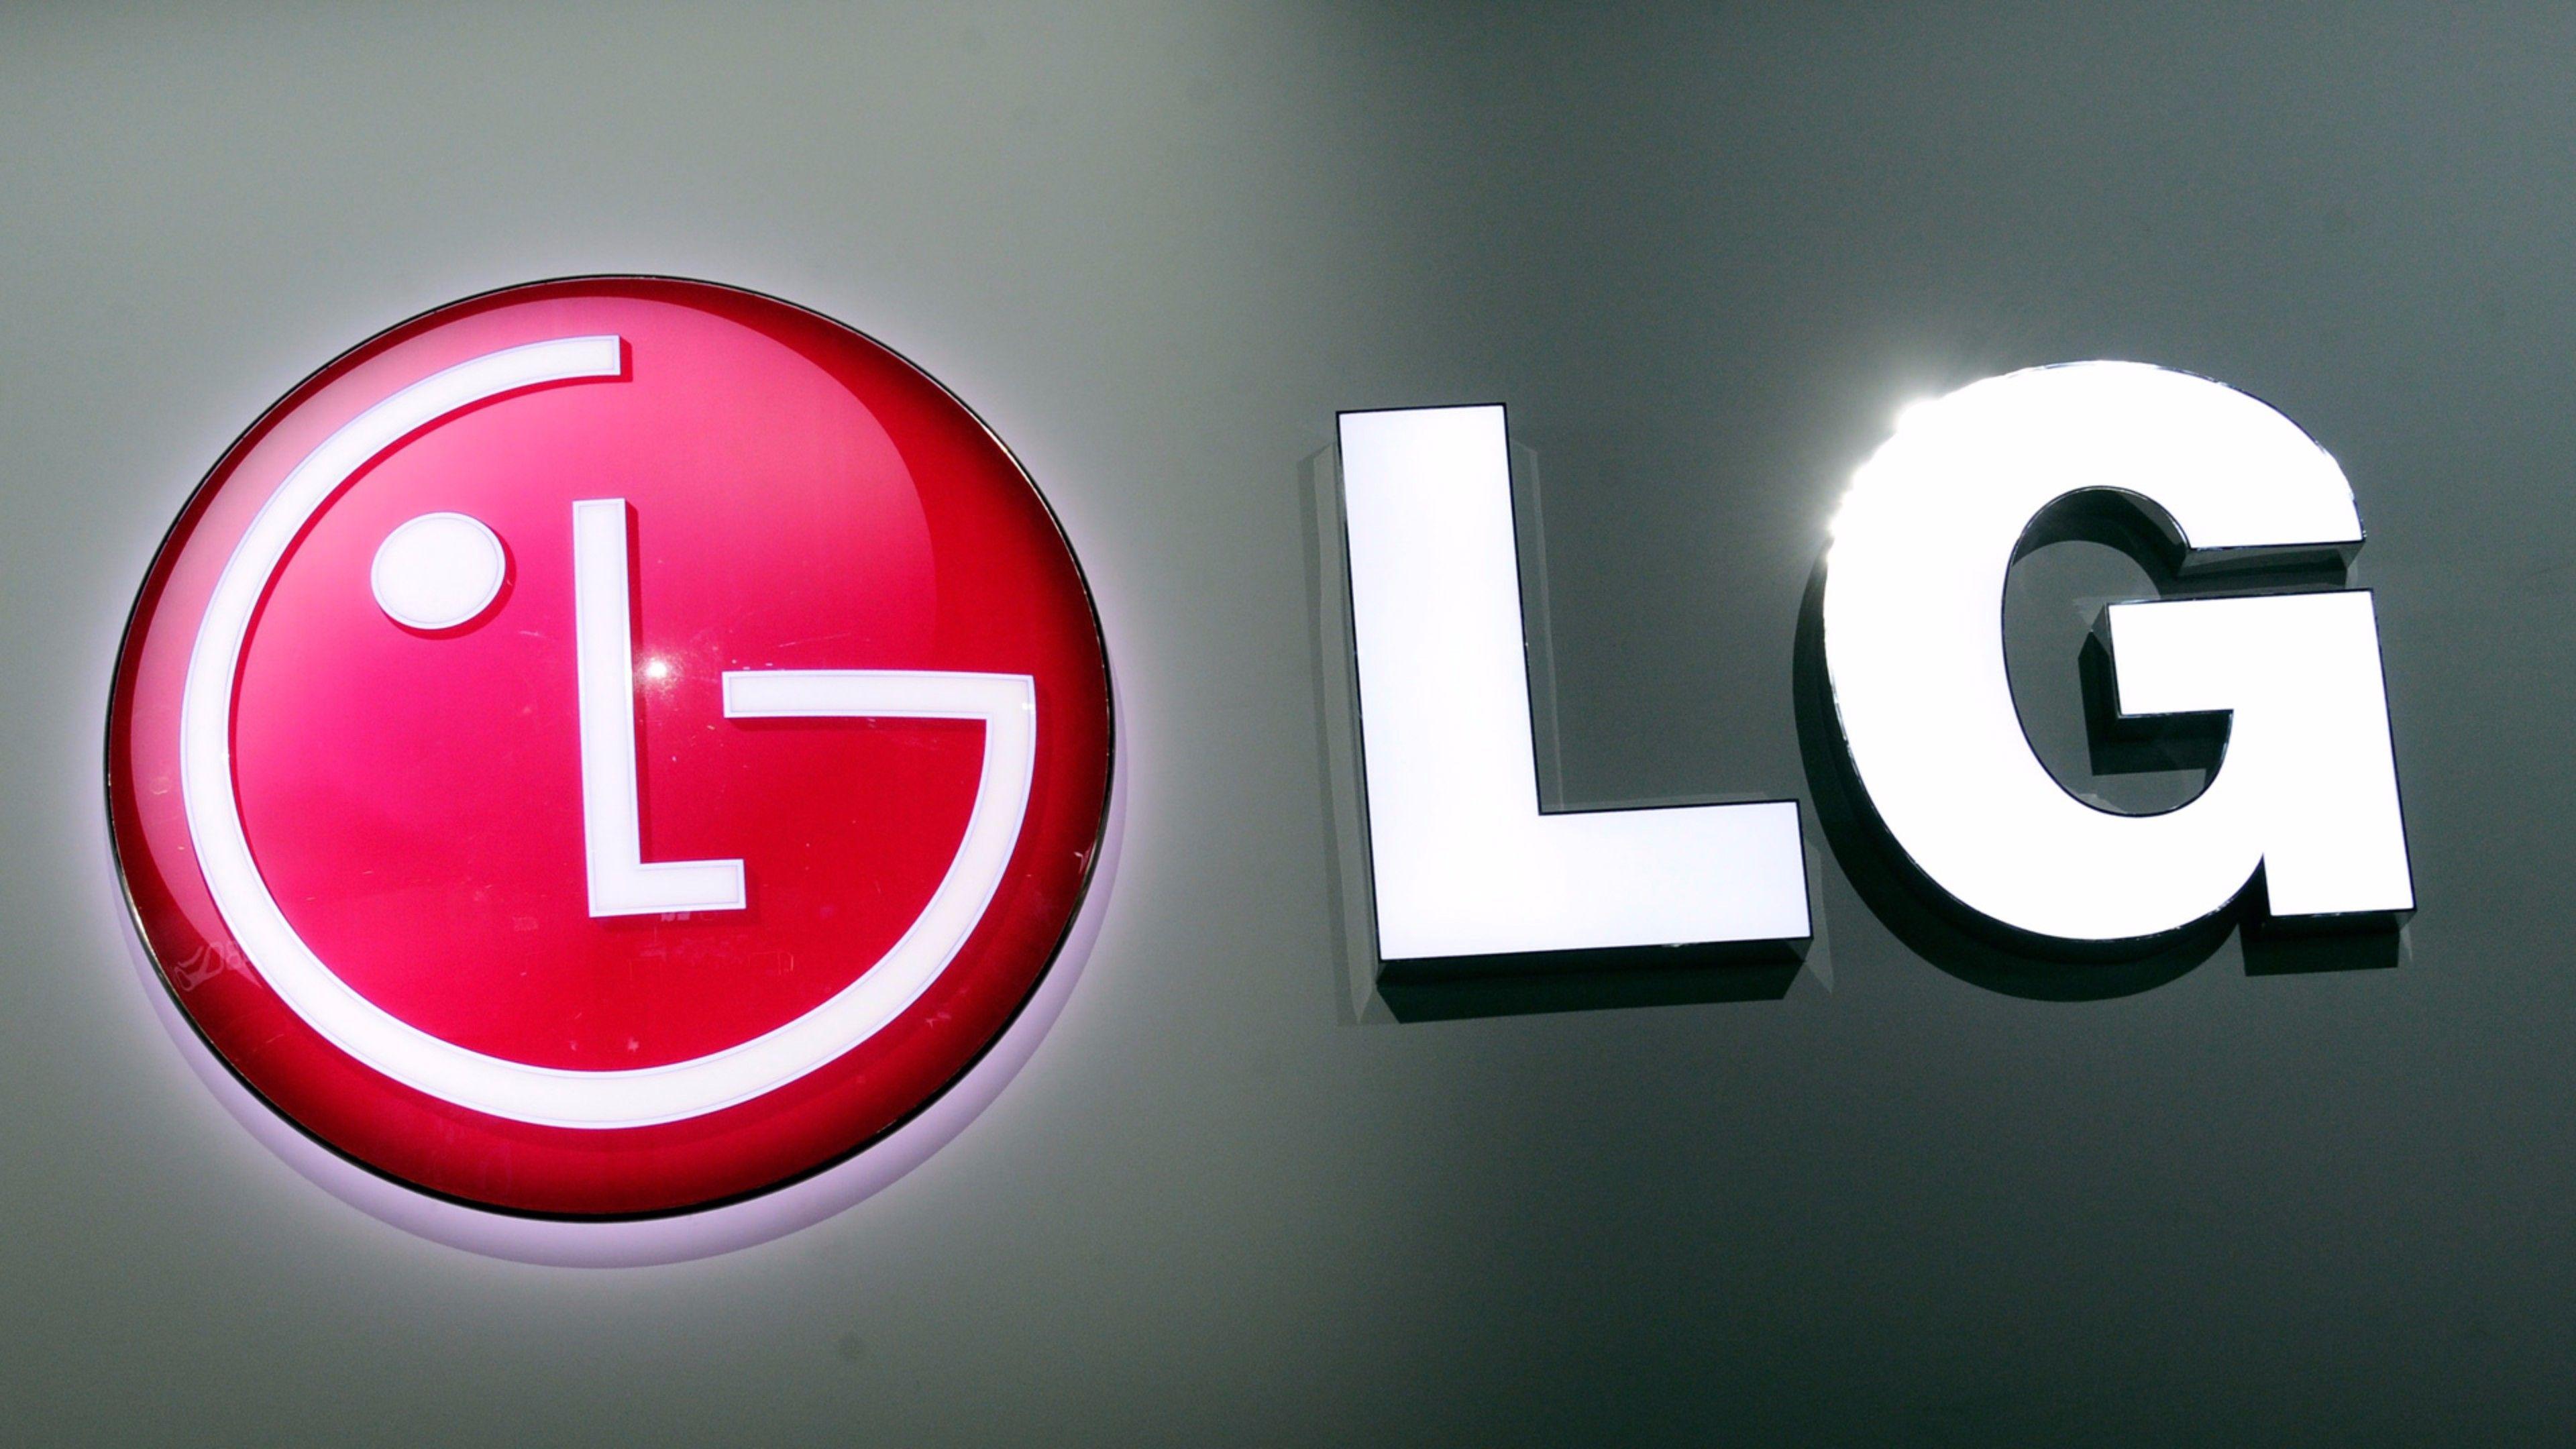 Cool LG Logo 4K Wallpaper. Free 4K Wallpaper